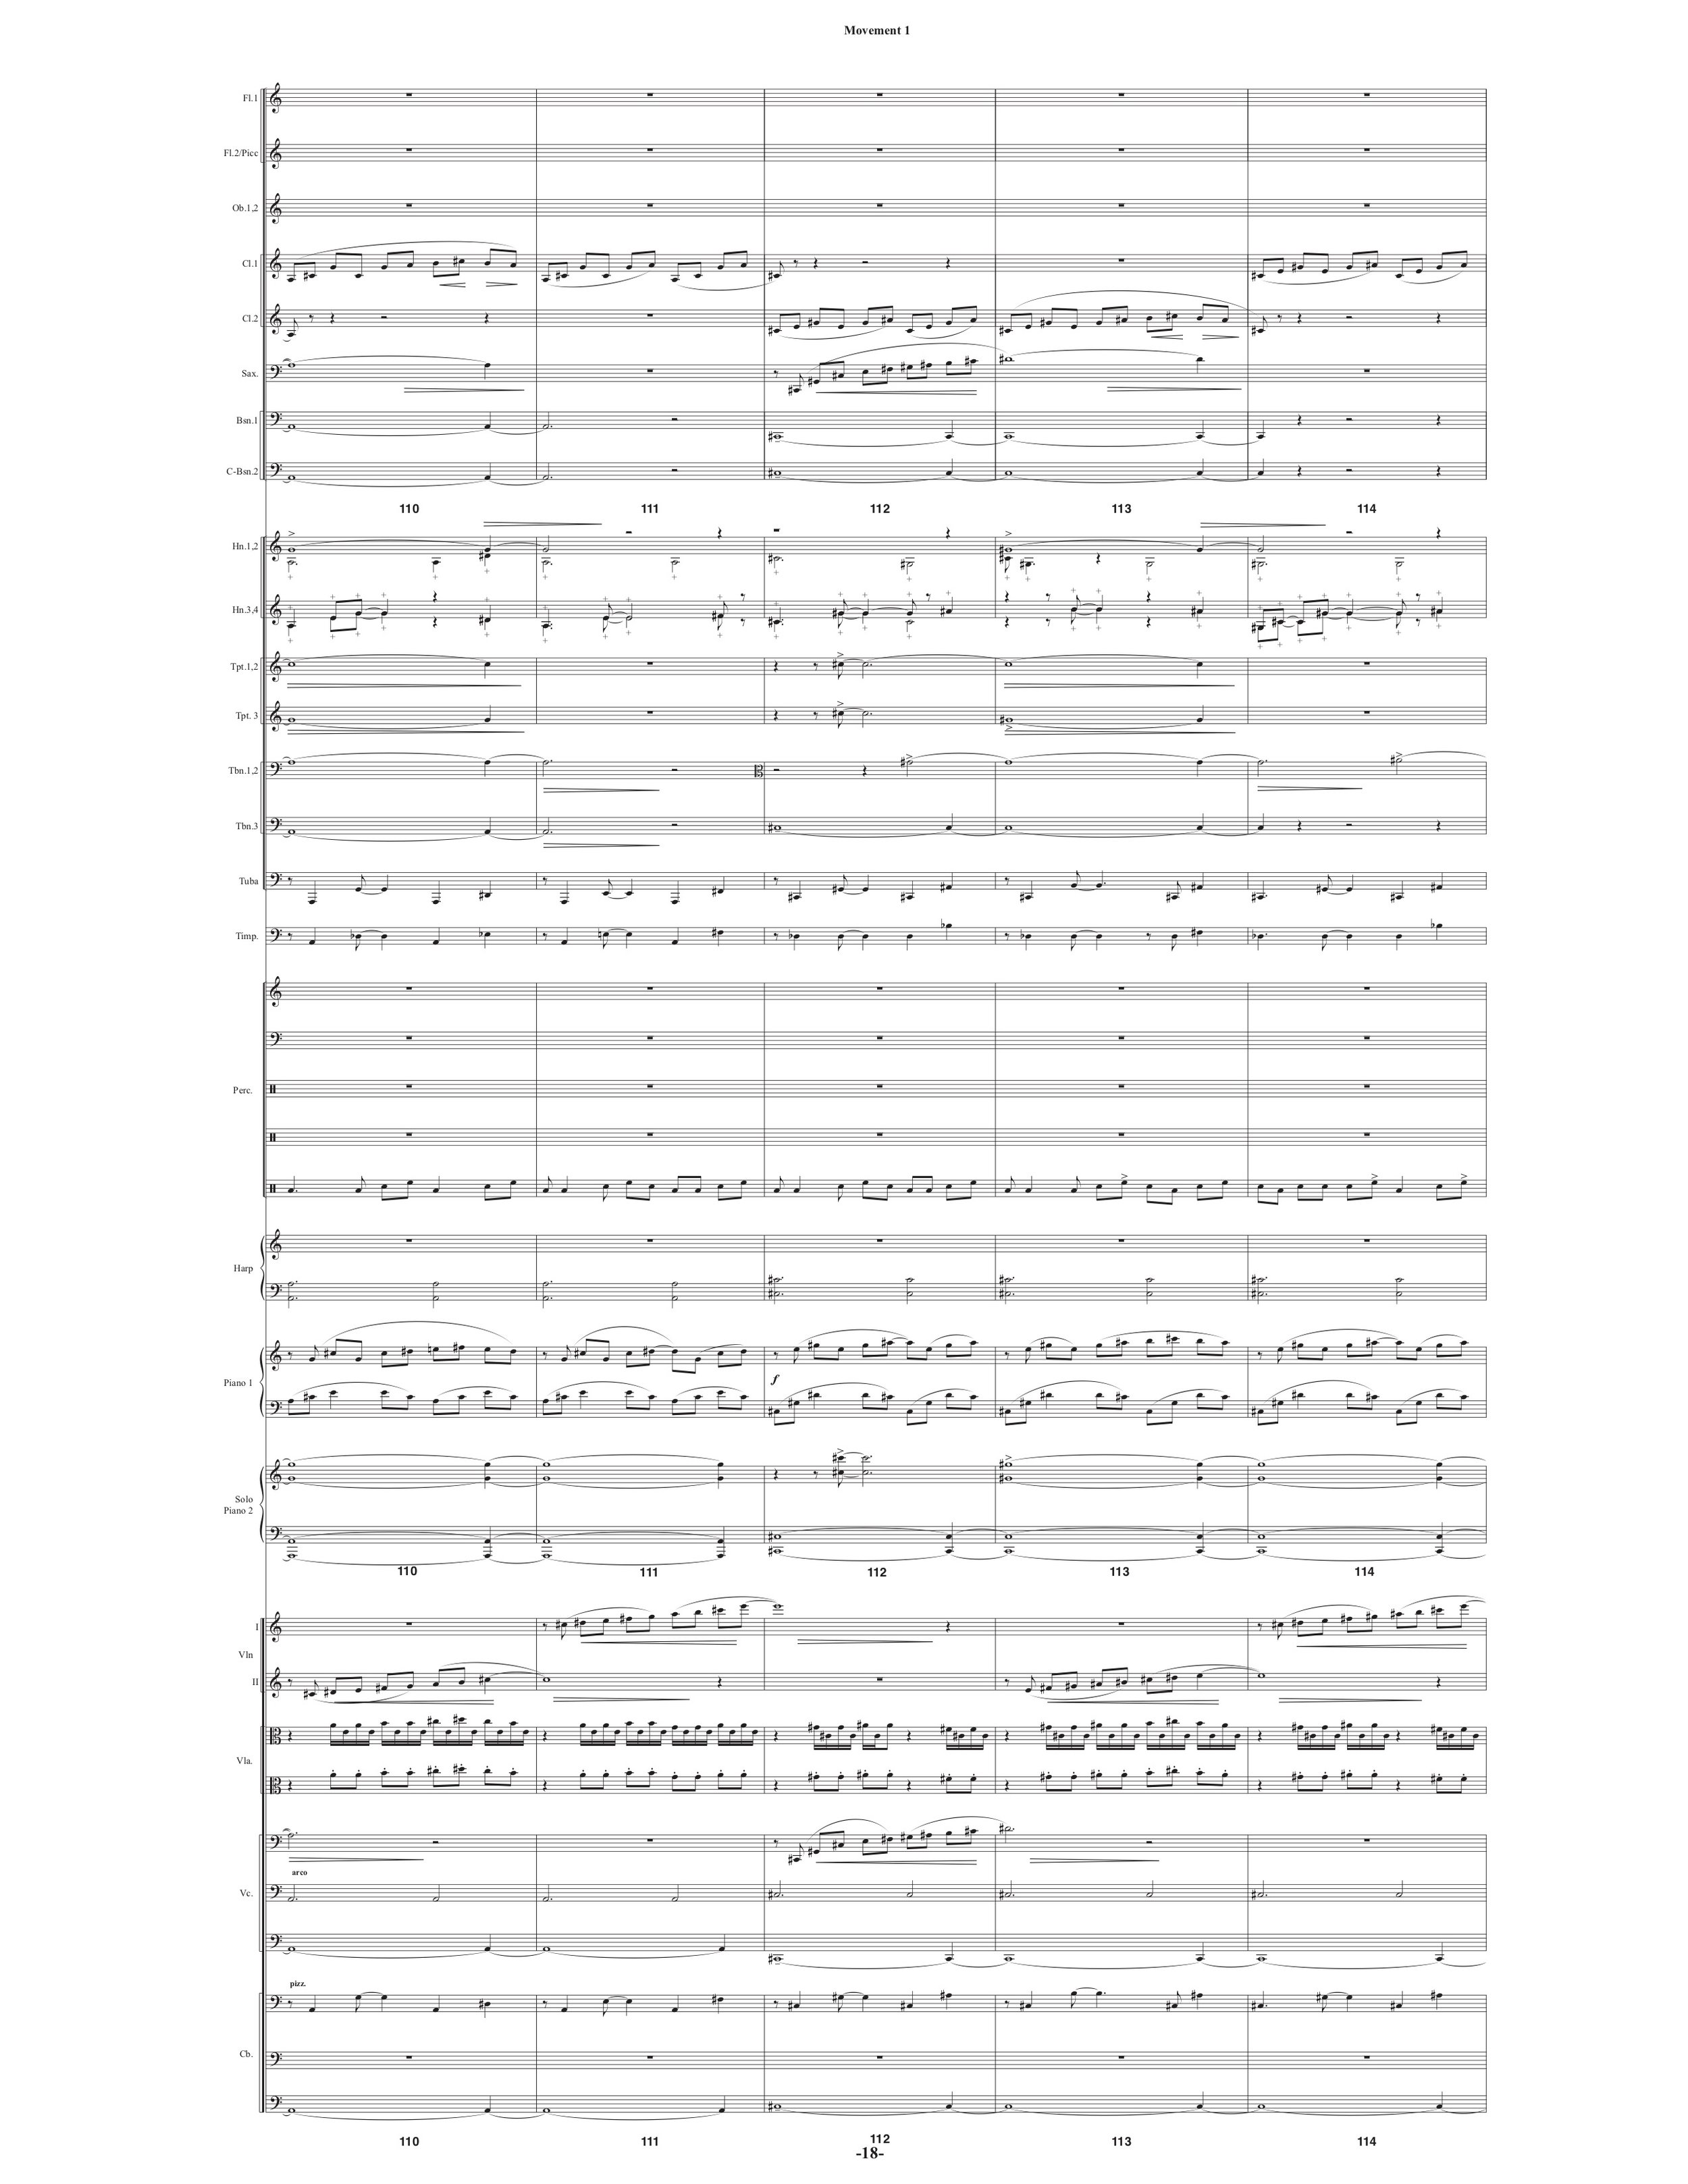 Symphony_Orch & 2 Pianos p23.jpg